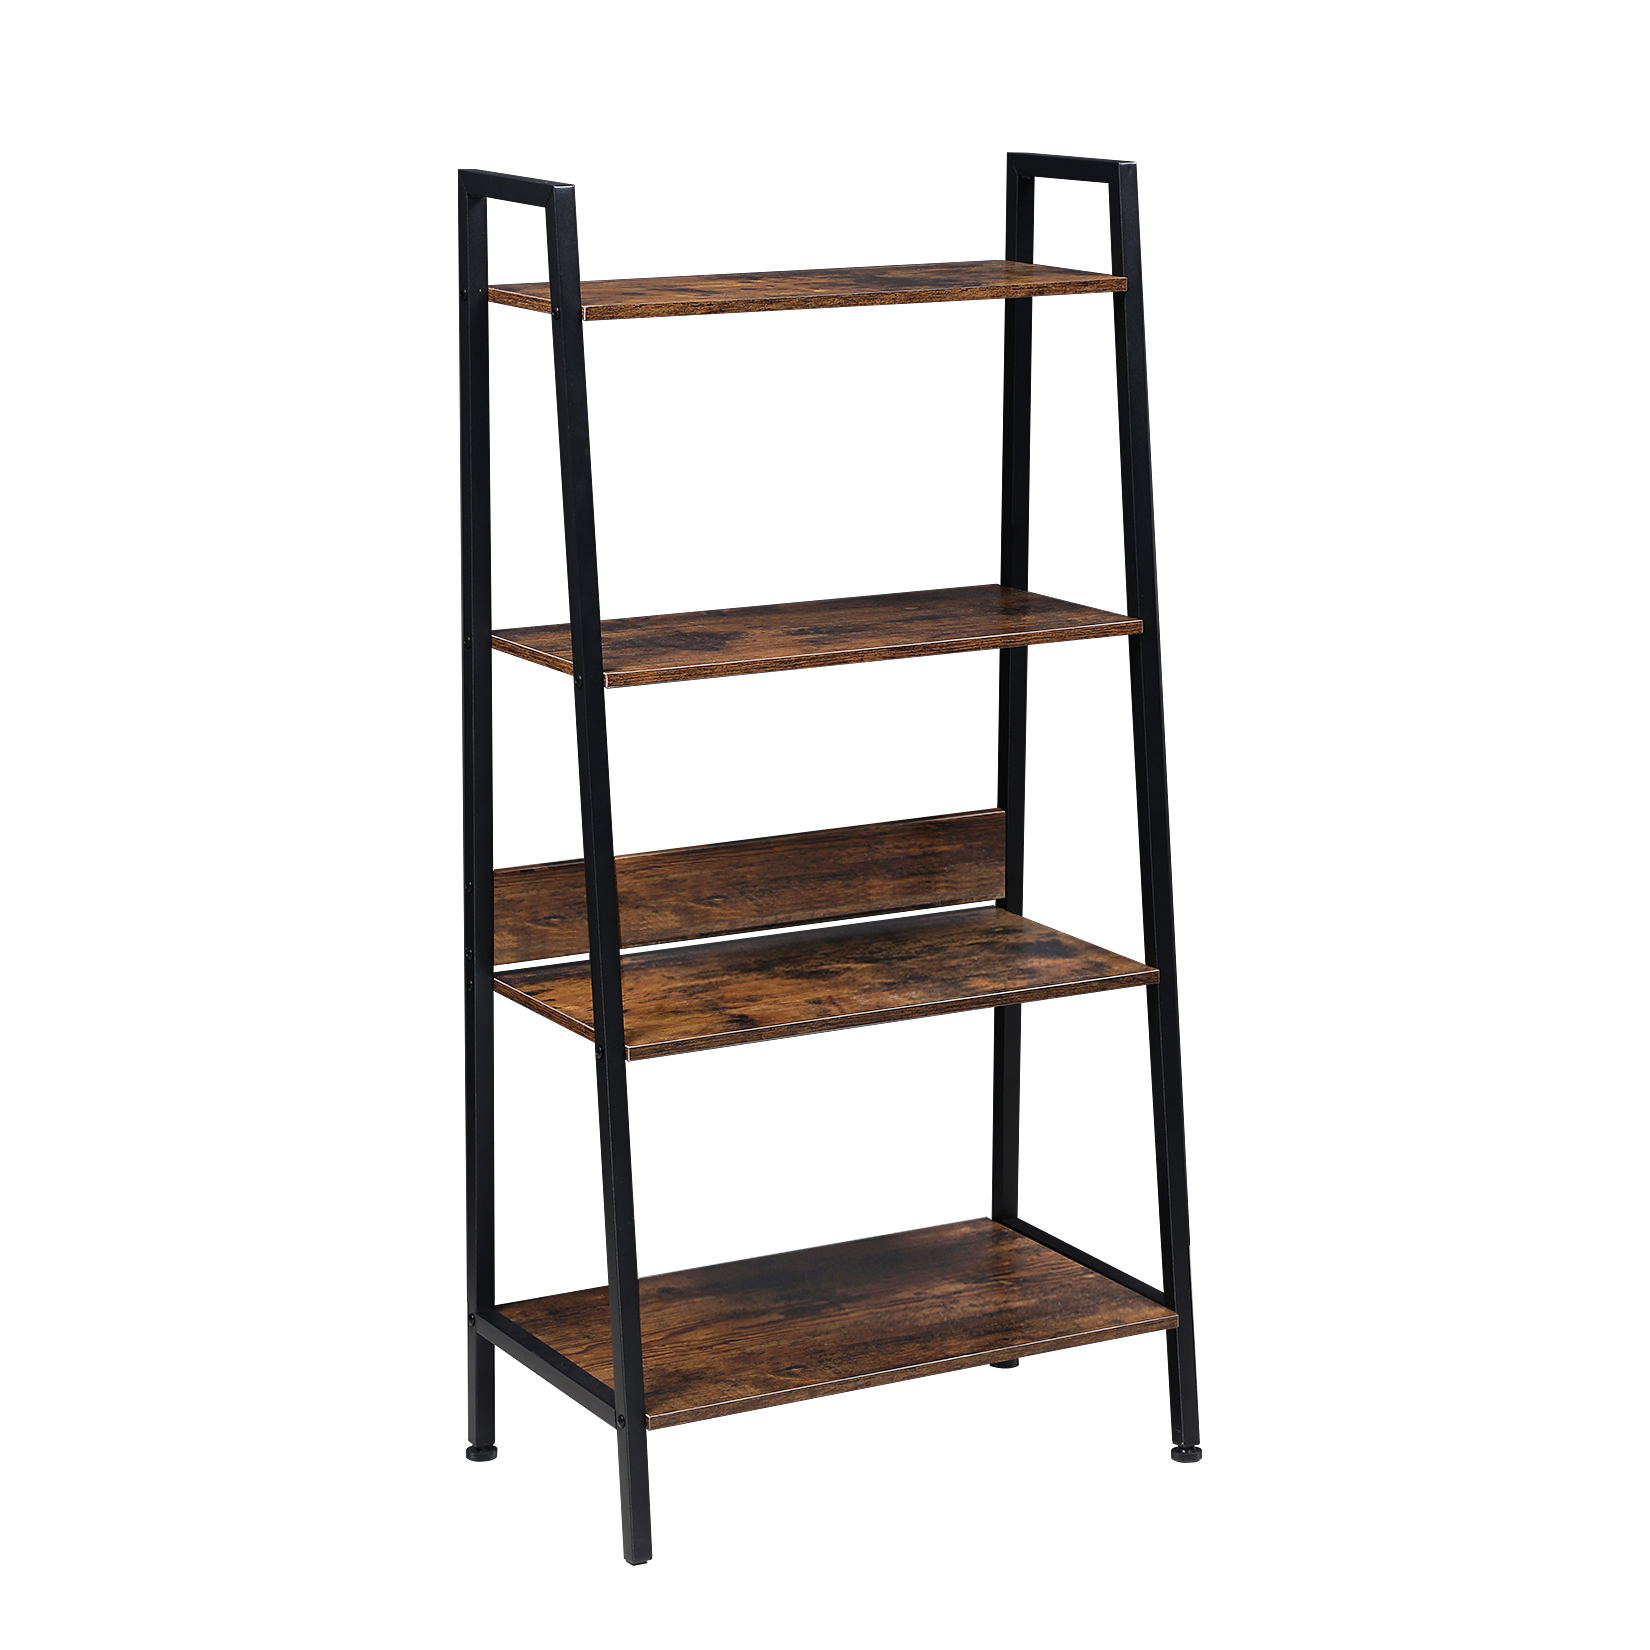 YSSOA 4-Tier Ladder Bookshelf Organizer, Rustic Brown Ladder Shelf for Home  Office, Wood Board  Metal Frame-Boyel Living